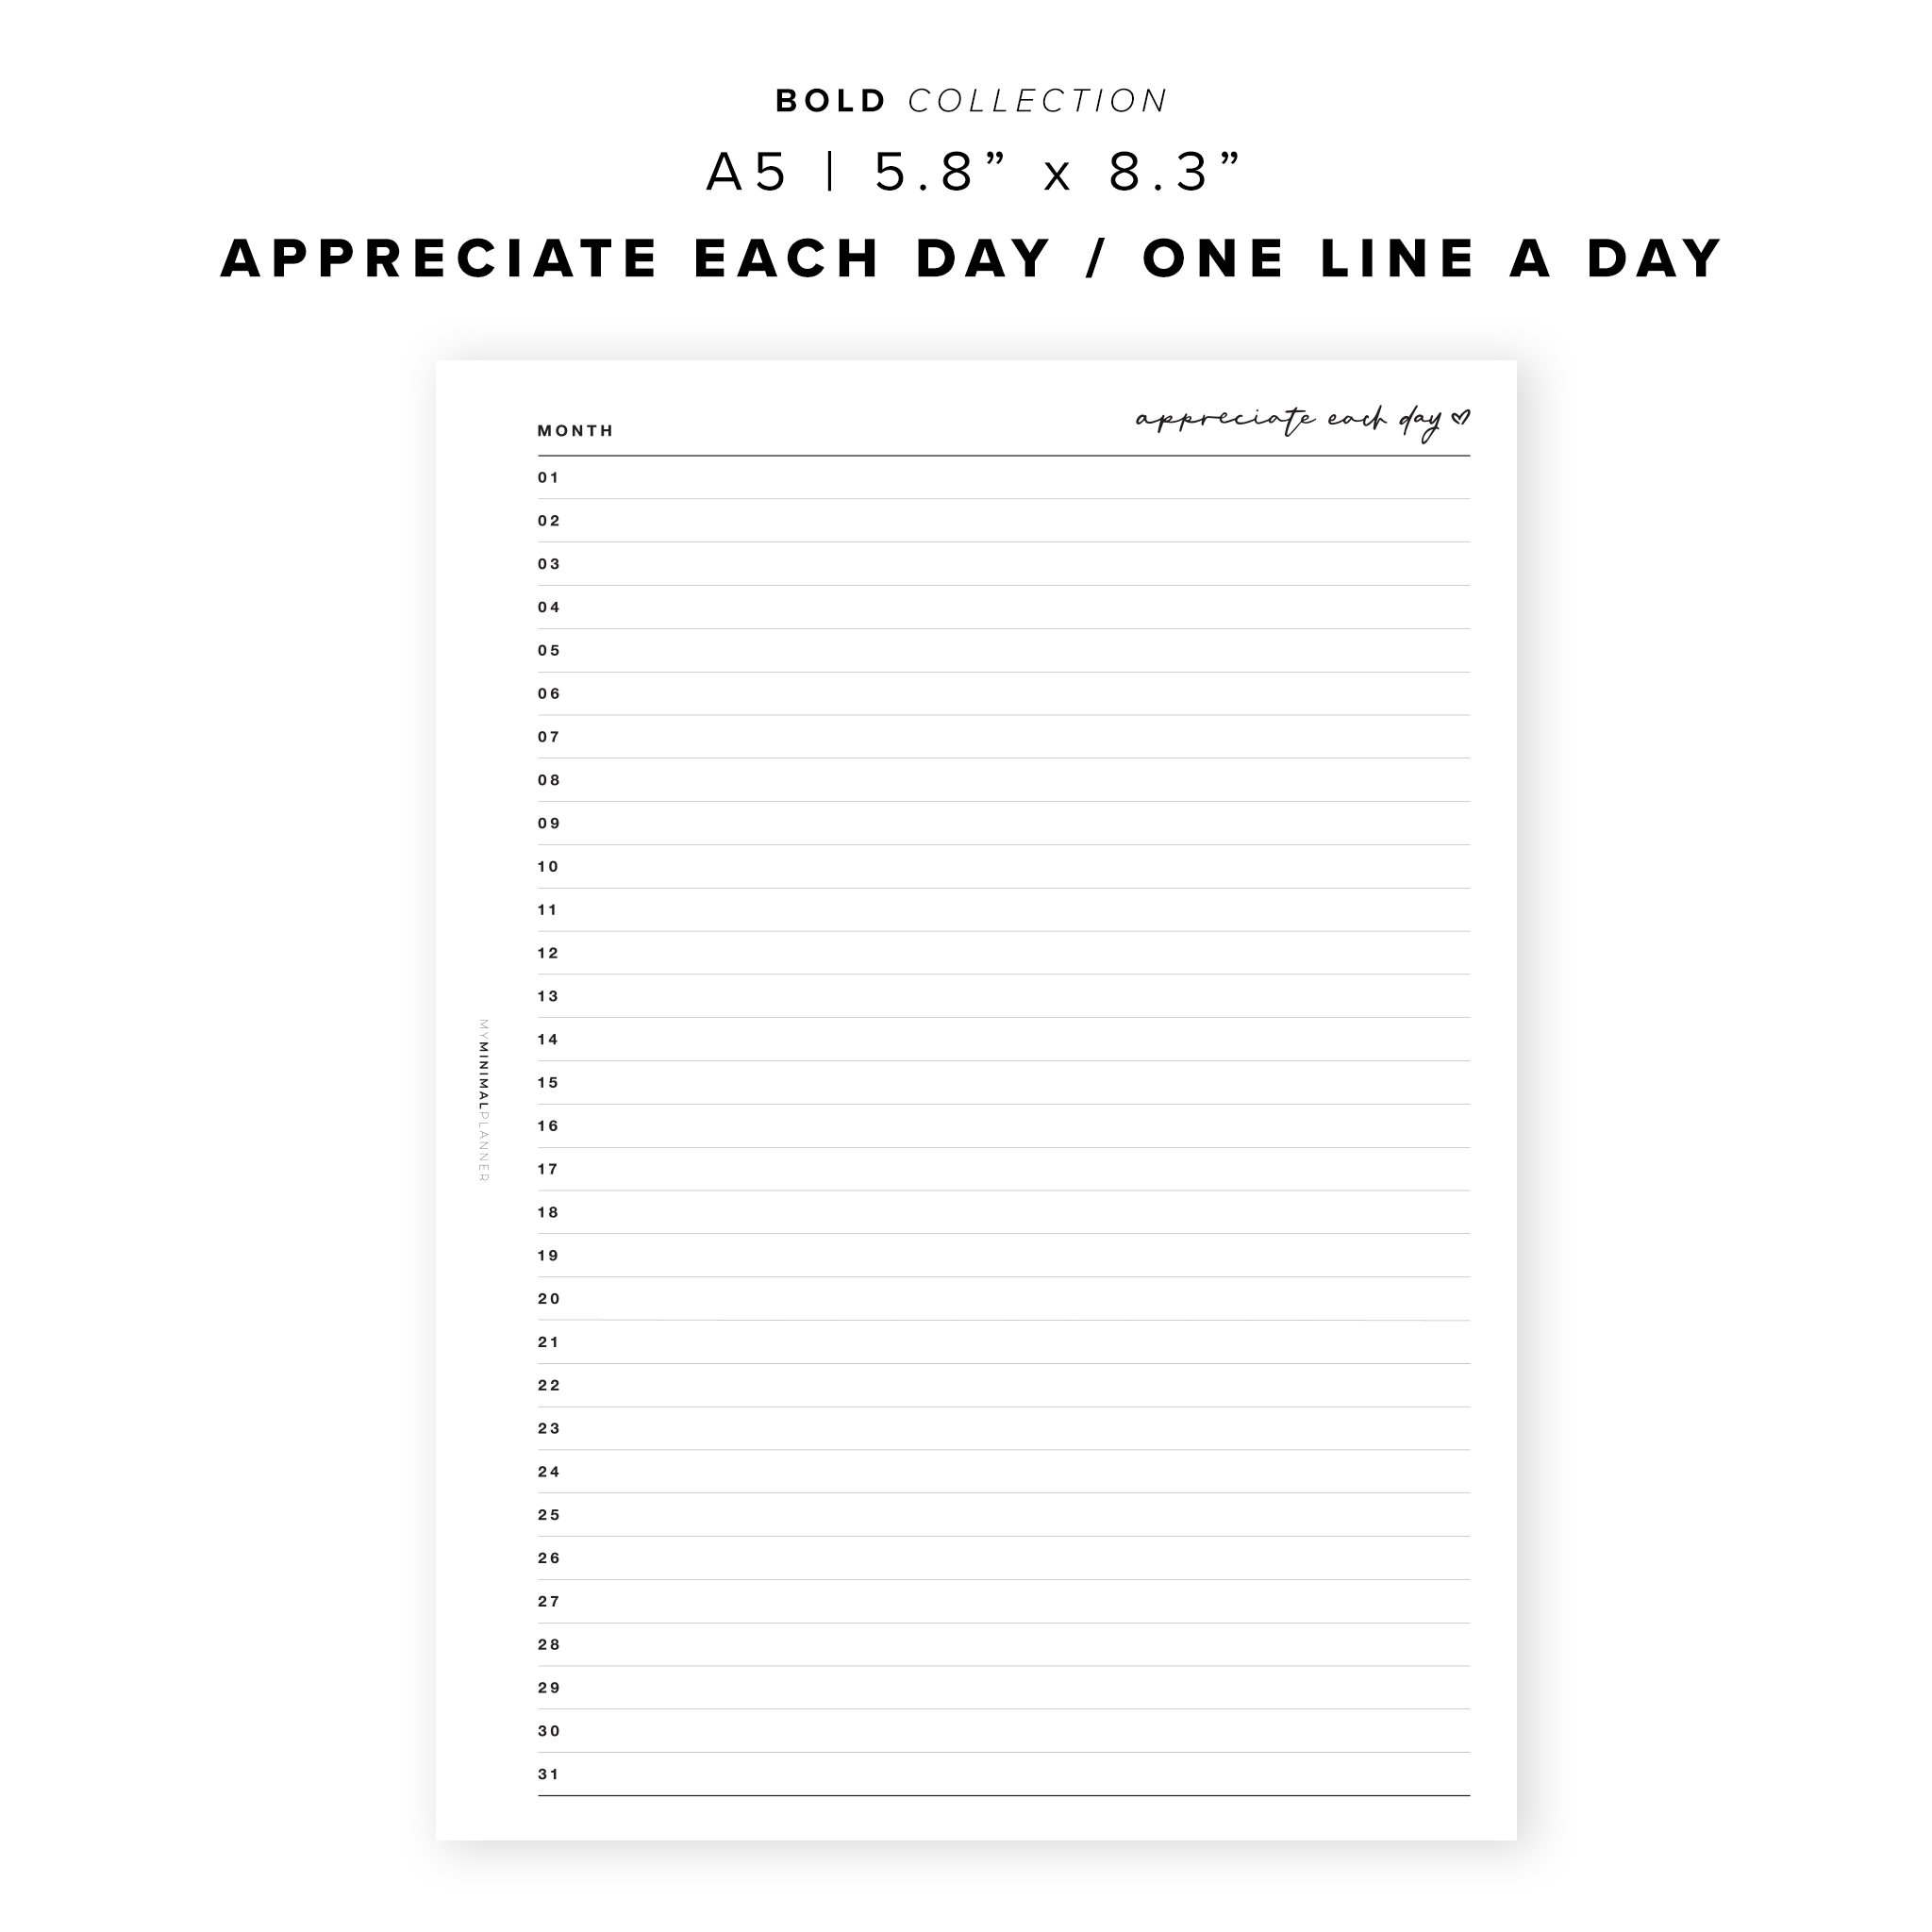 PR28 - Appreciate Each Day / One Line A Day - Printable Insert